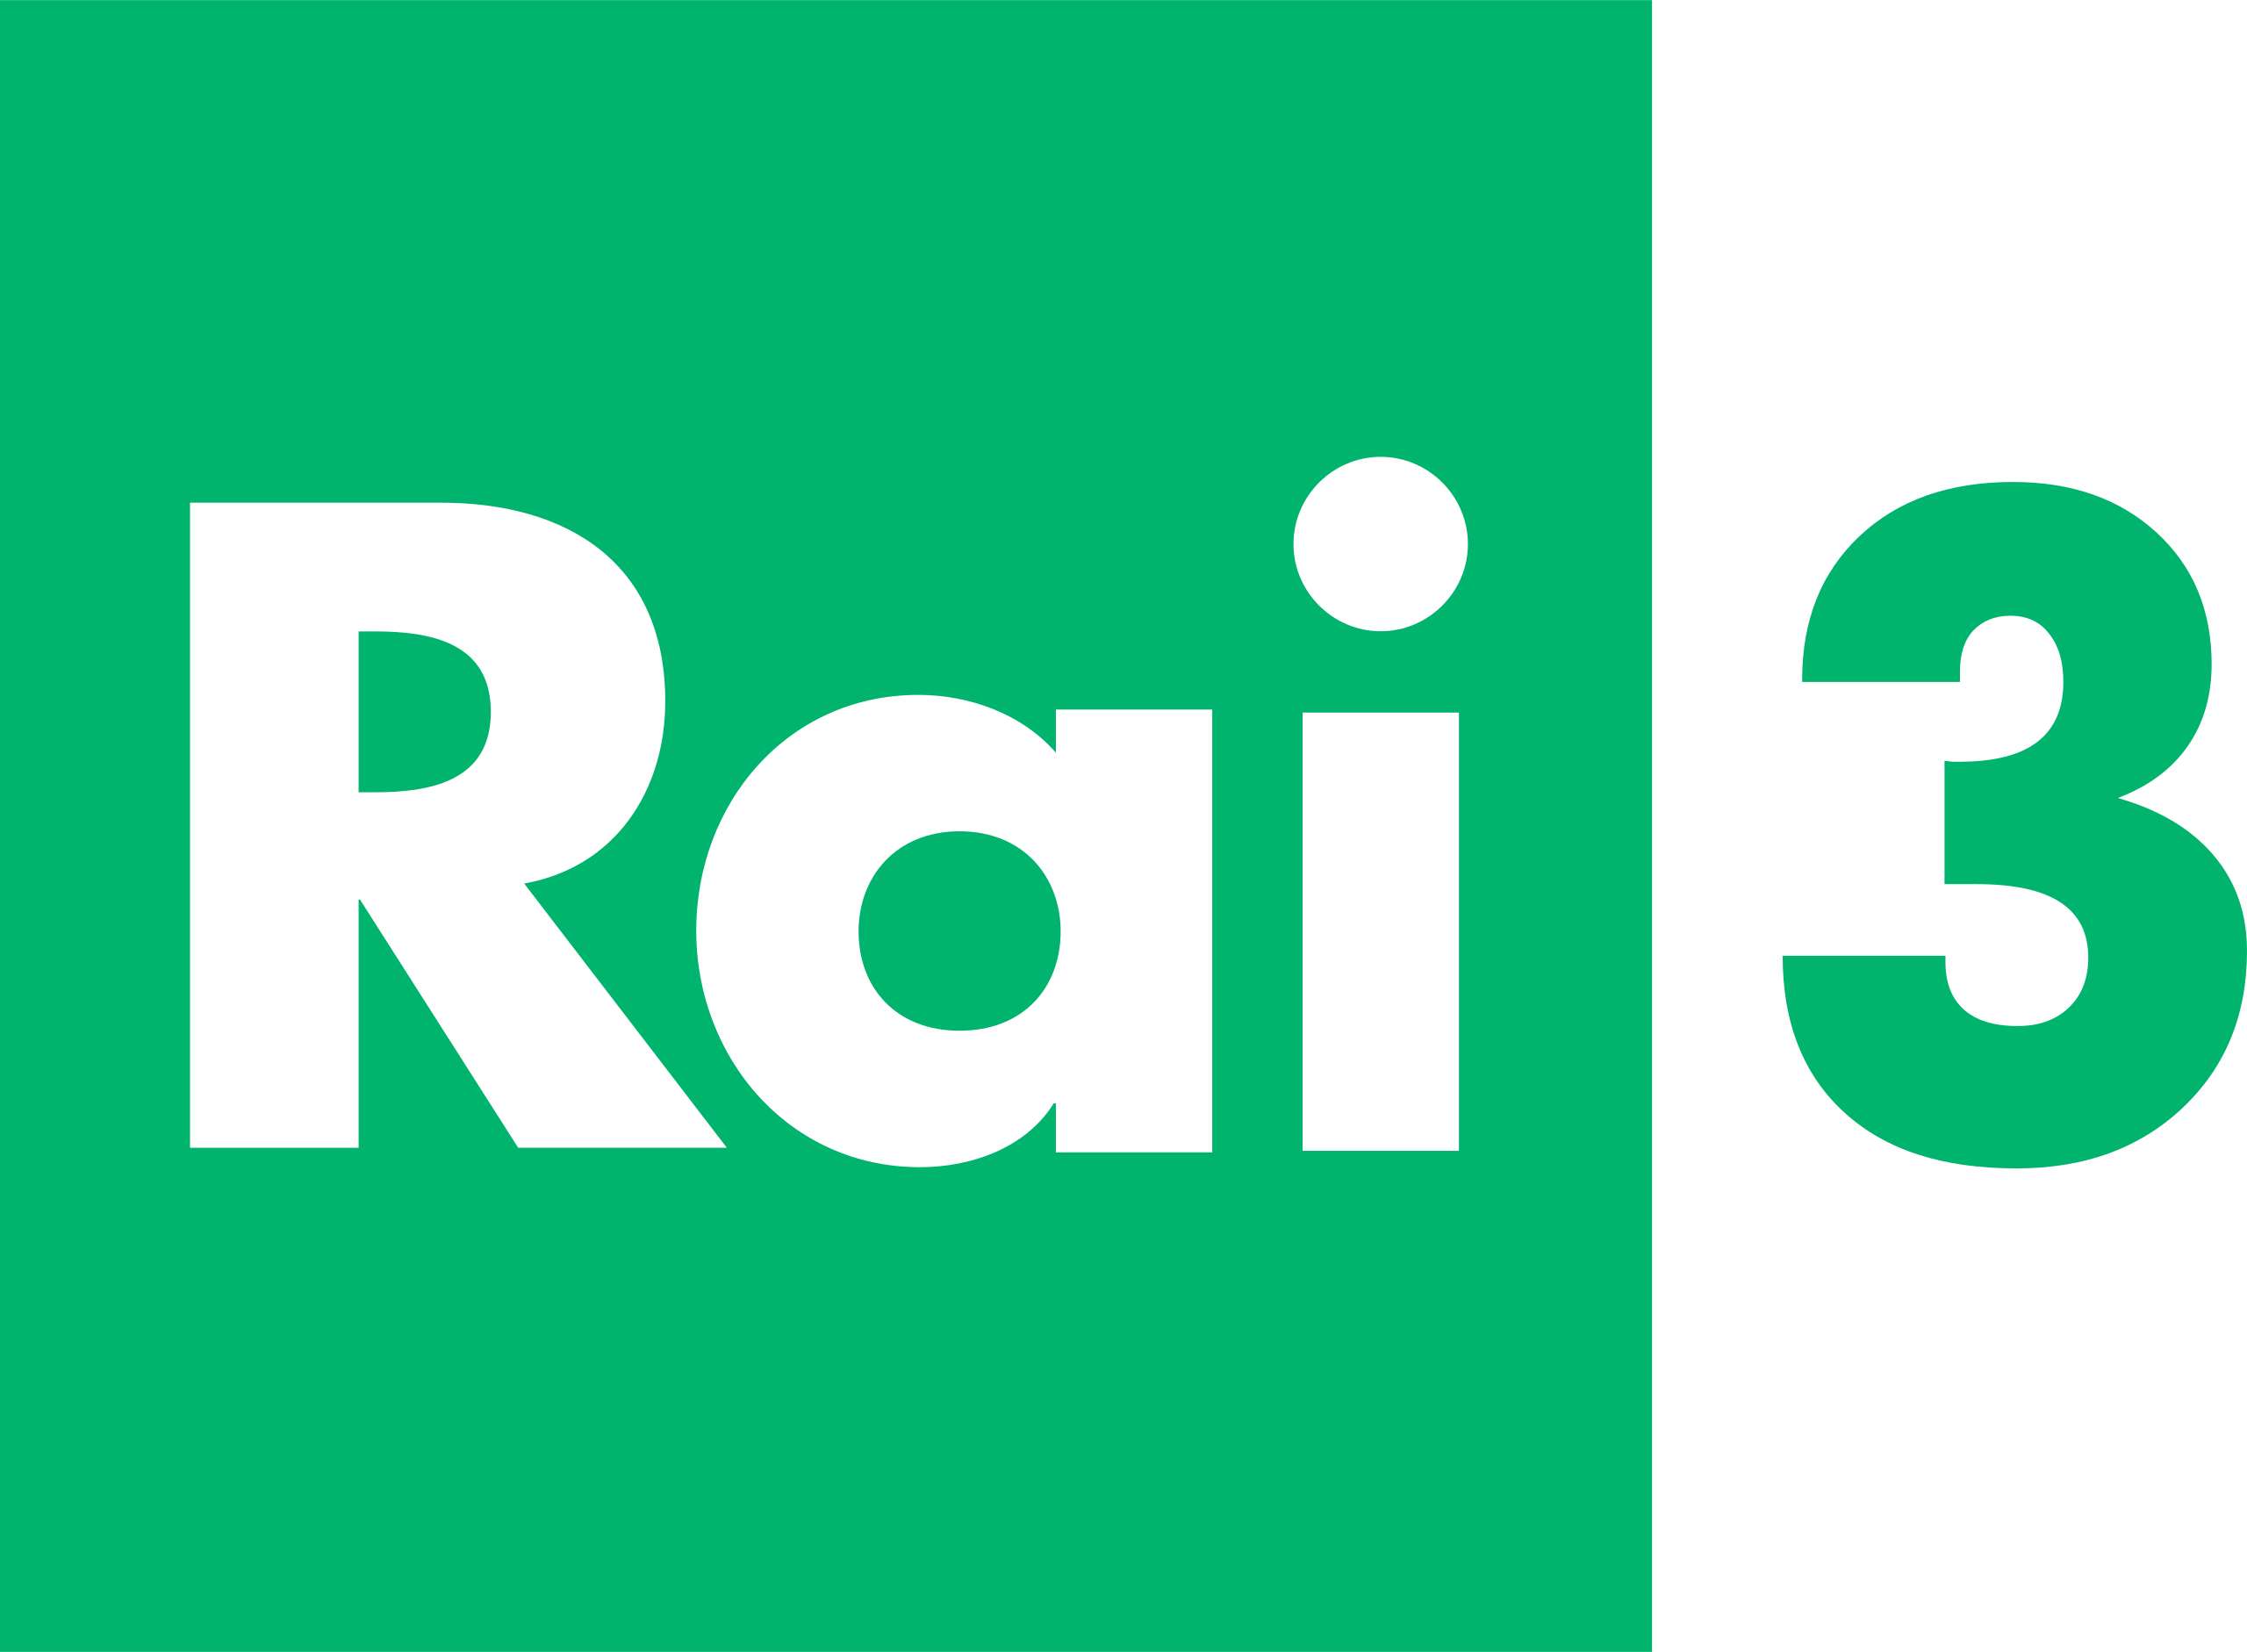 Logo Rai 3